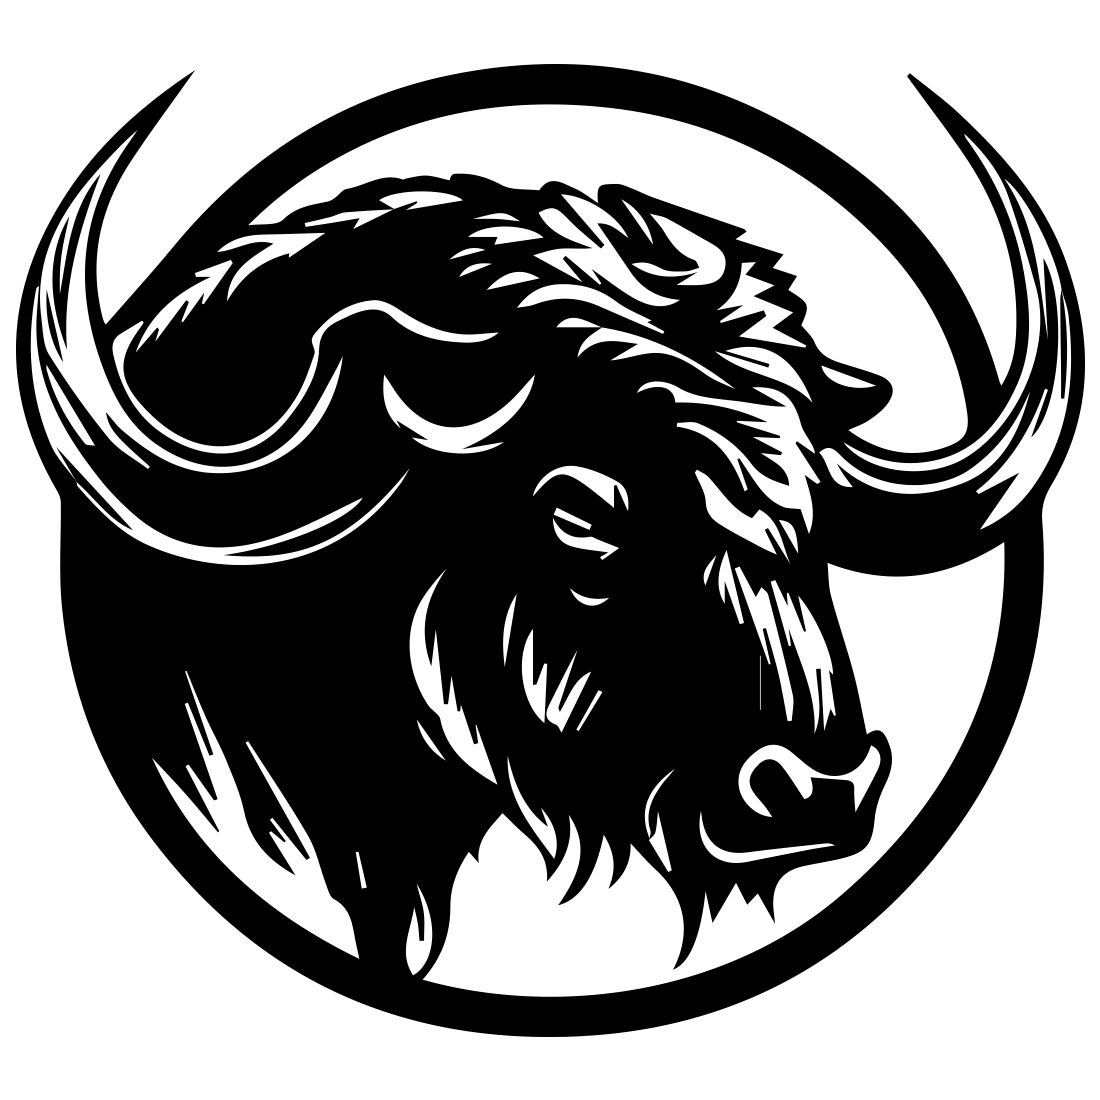 Buffalo outline logo horns circle cover image.